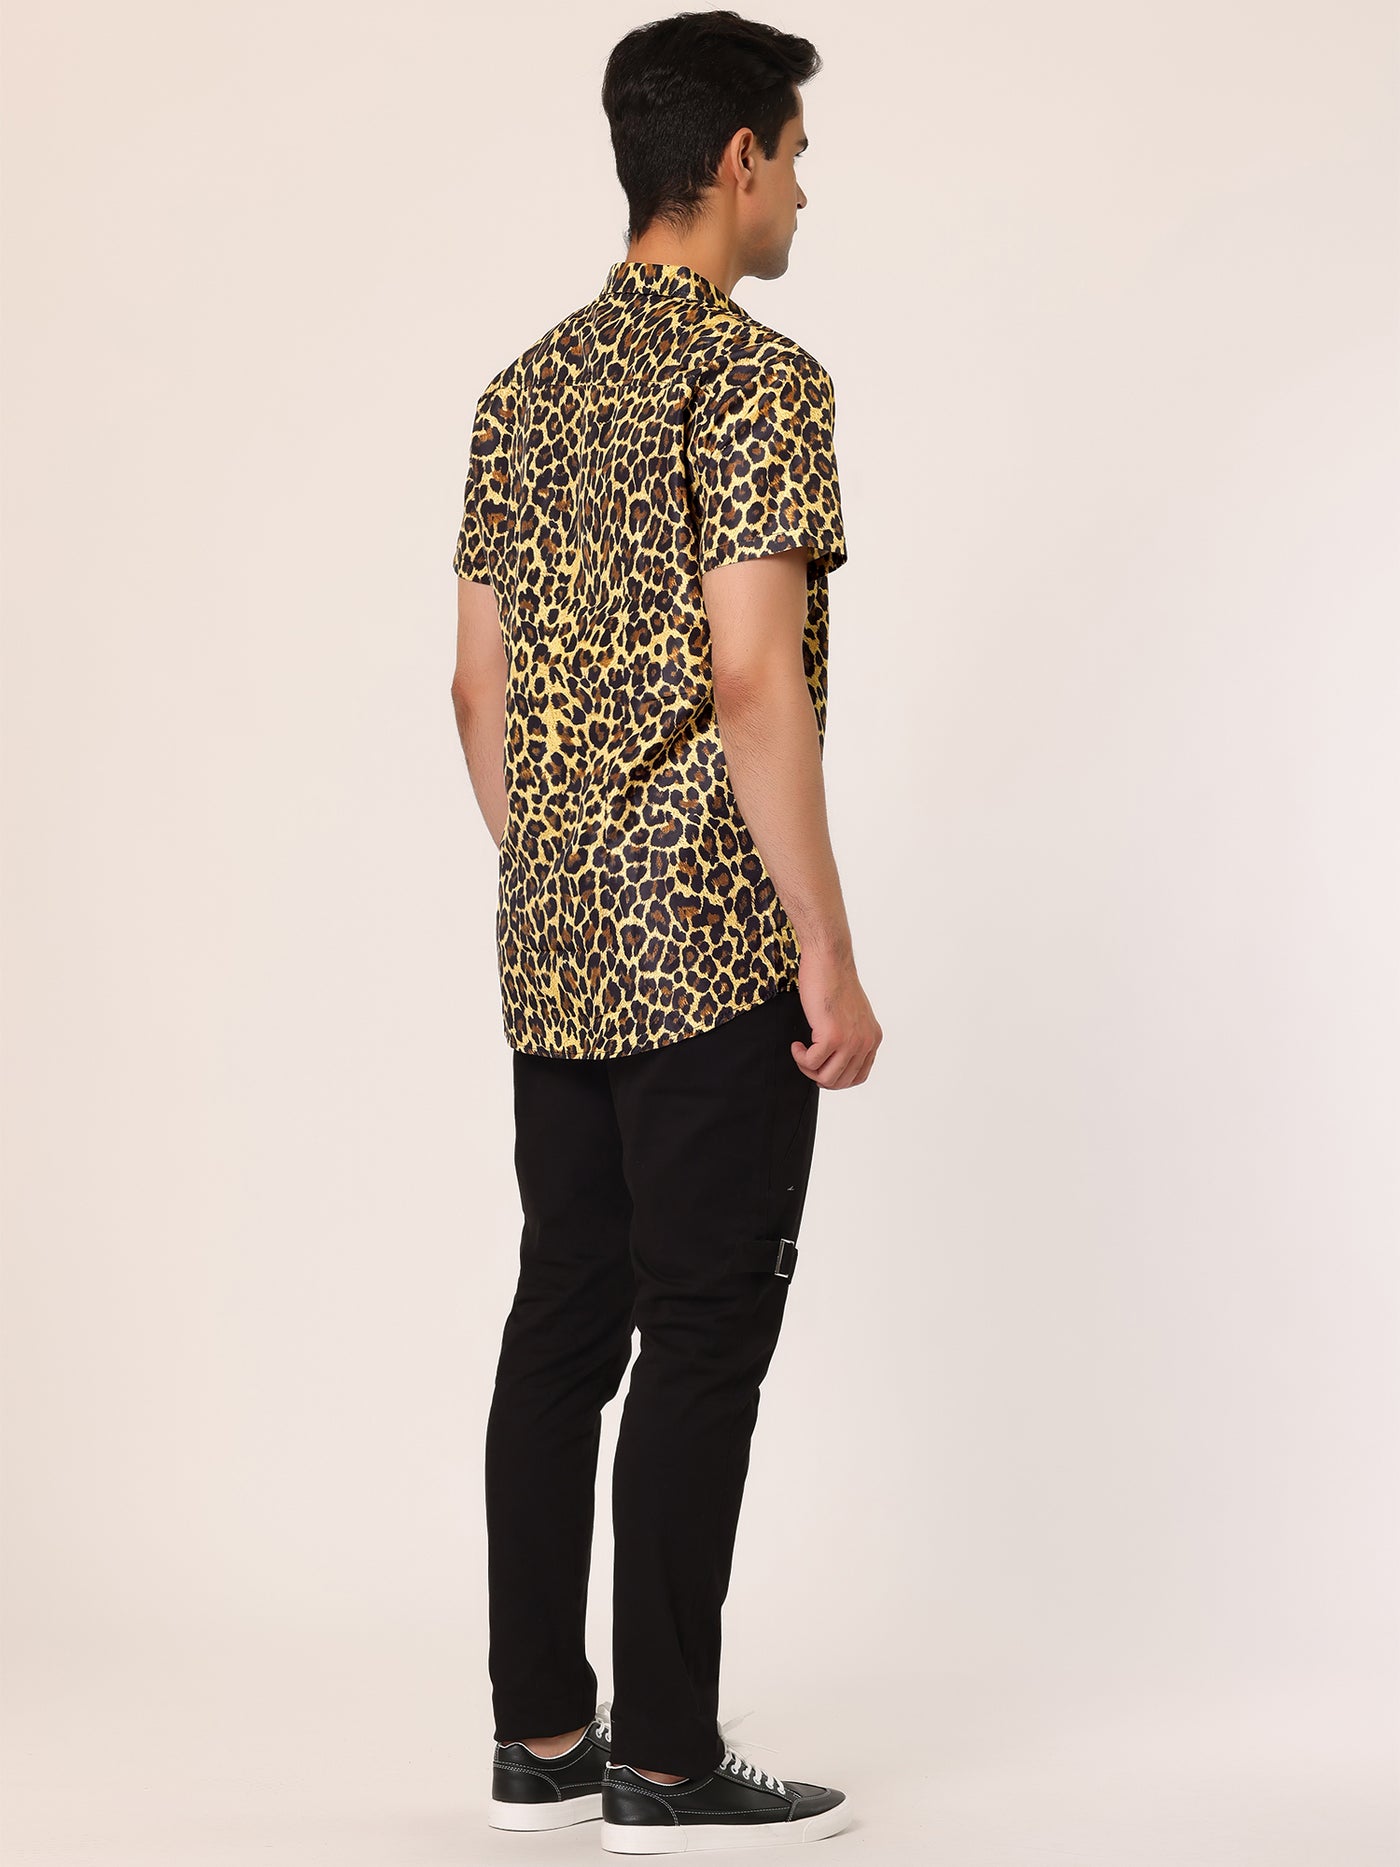 Bublédon Men's Leopard Button Down Short Sleeves Vintage Animal Cheetah Print Shirts